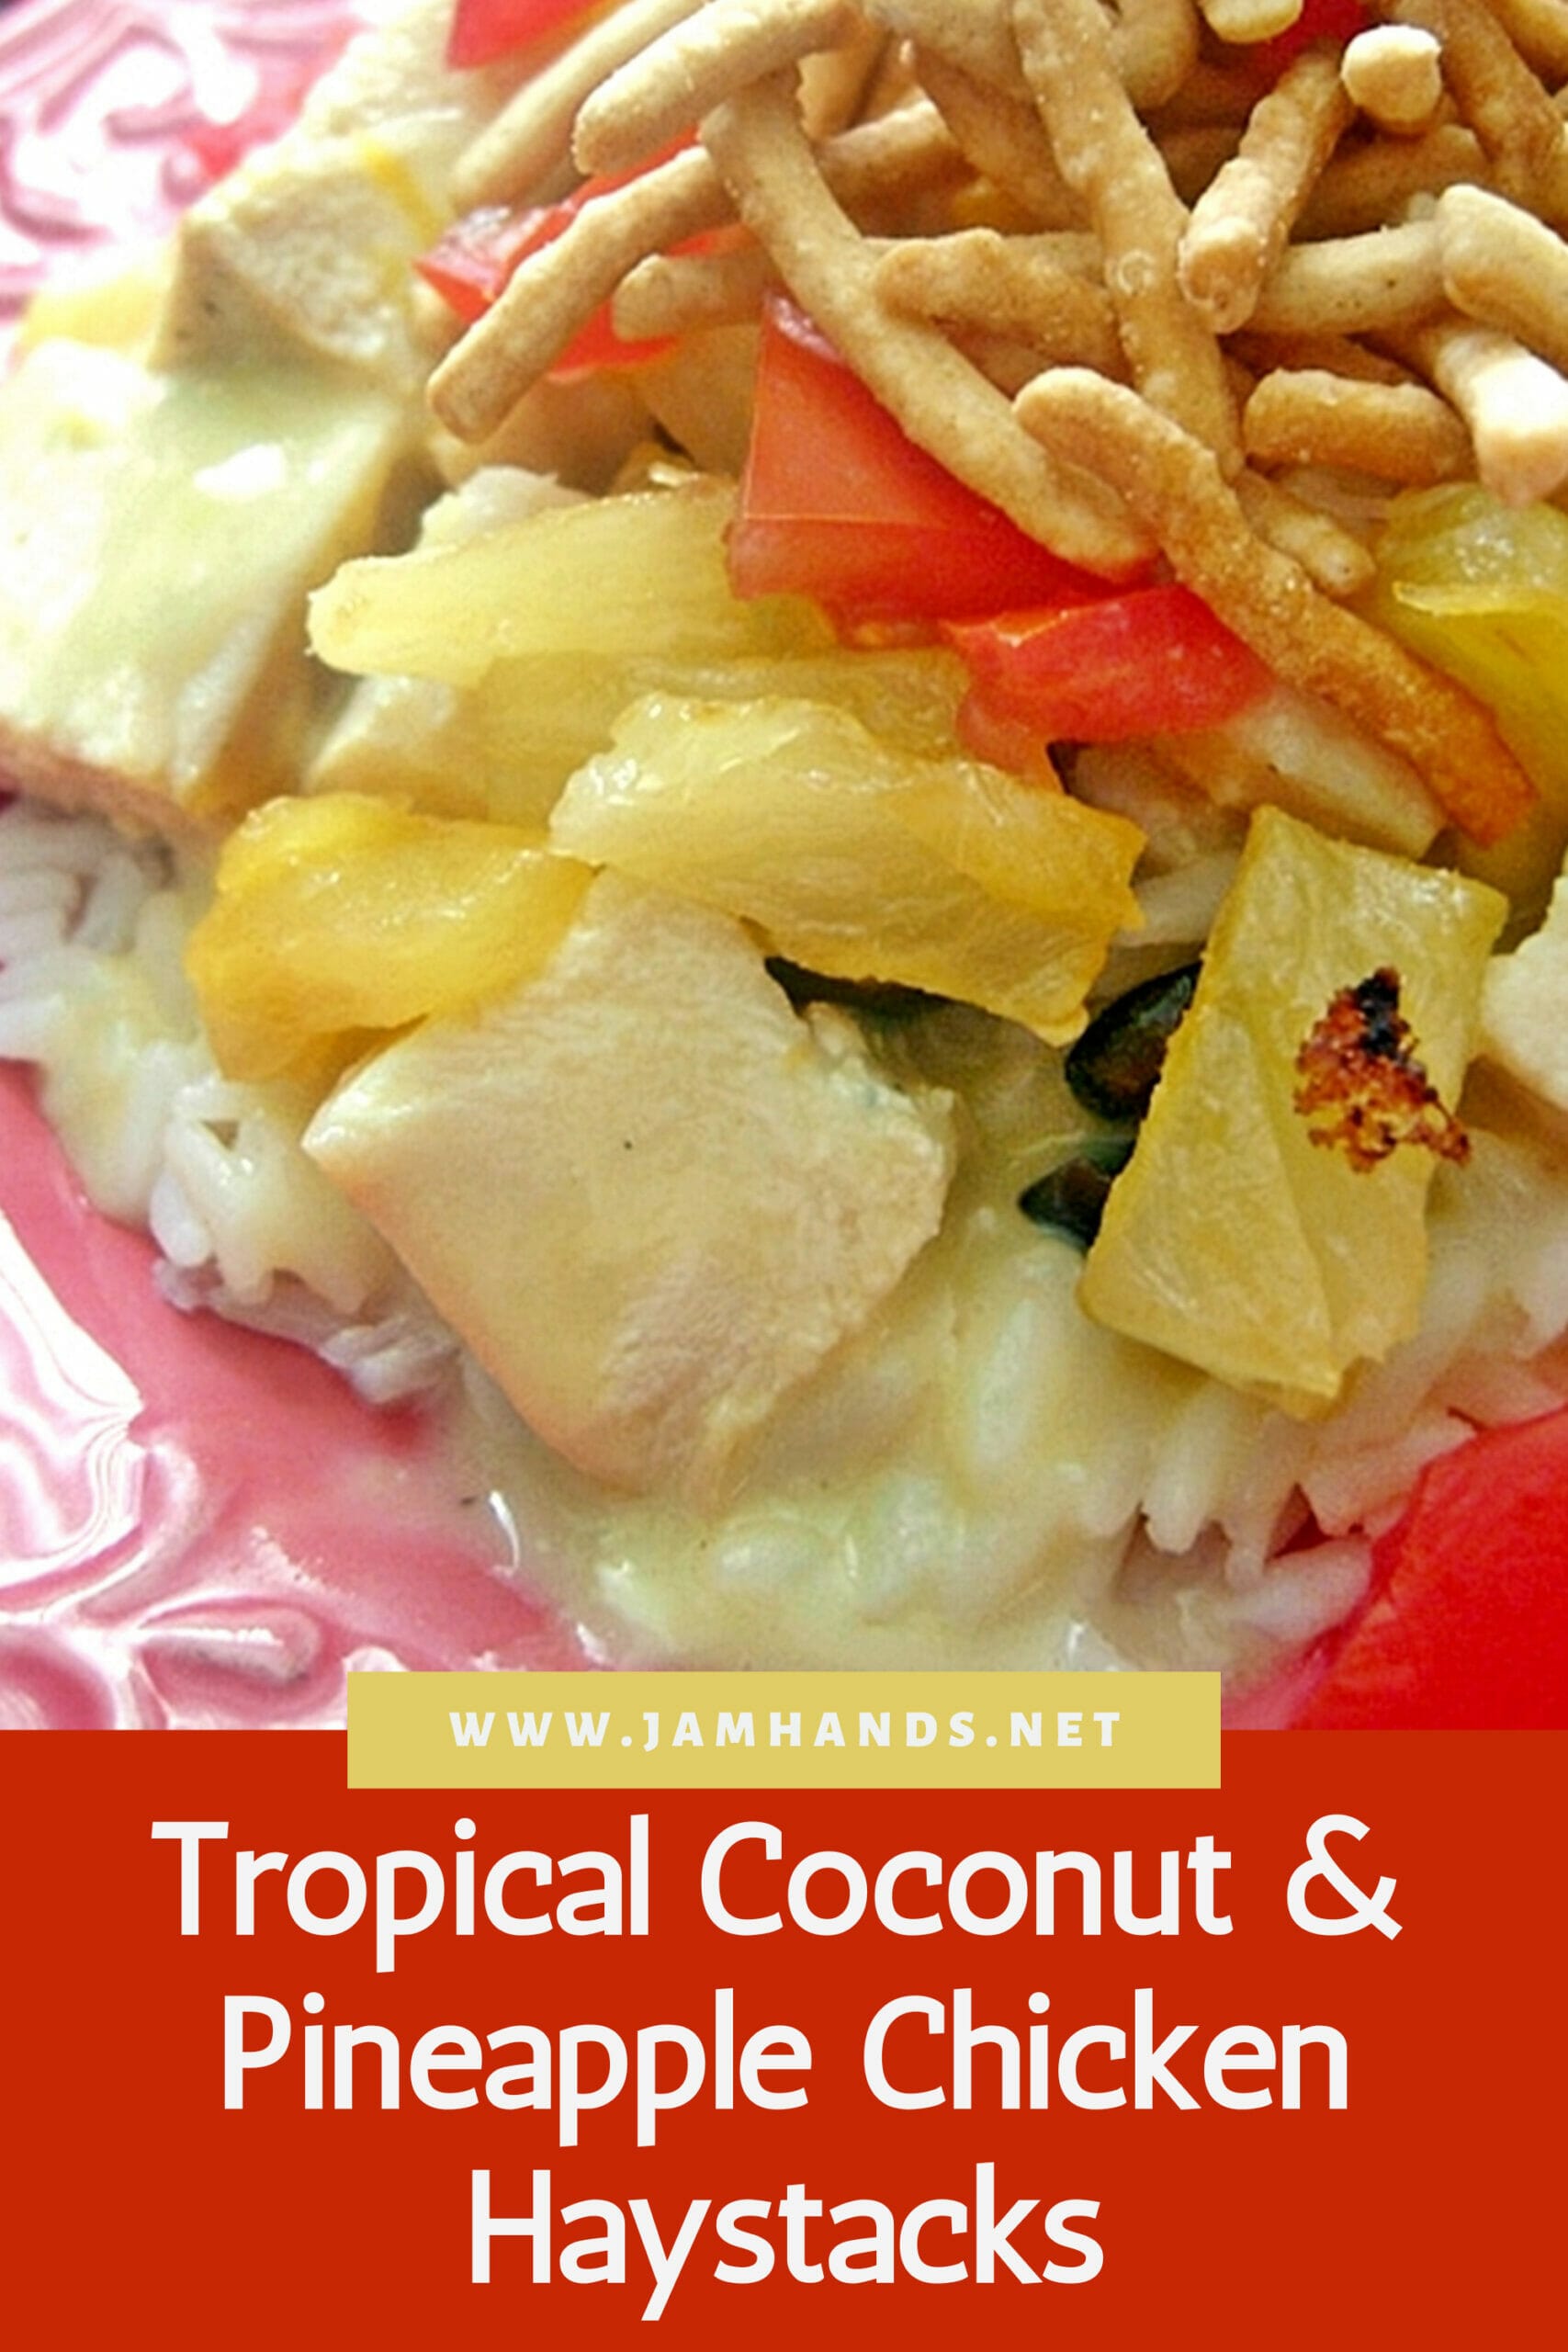 Tropical Coconut & Pineapple Chicken Haystacks